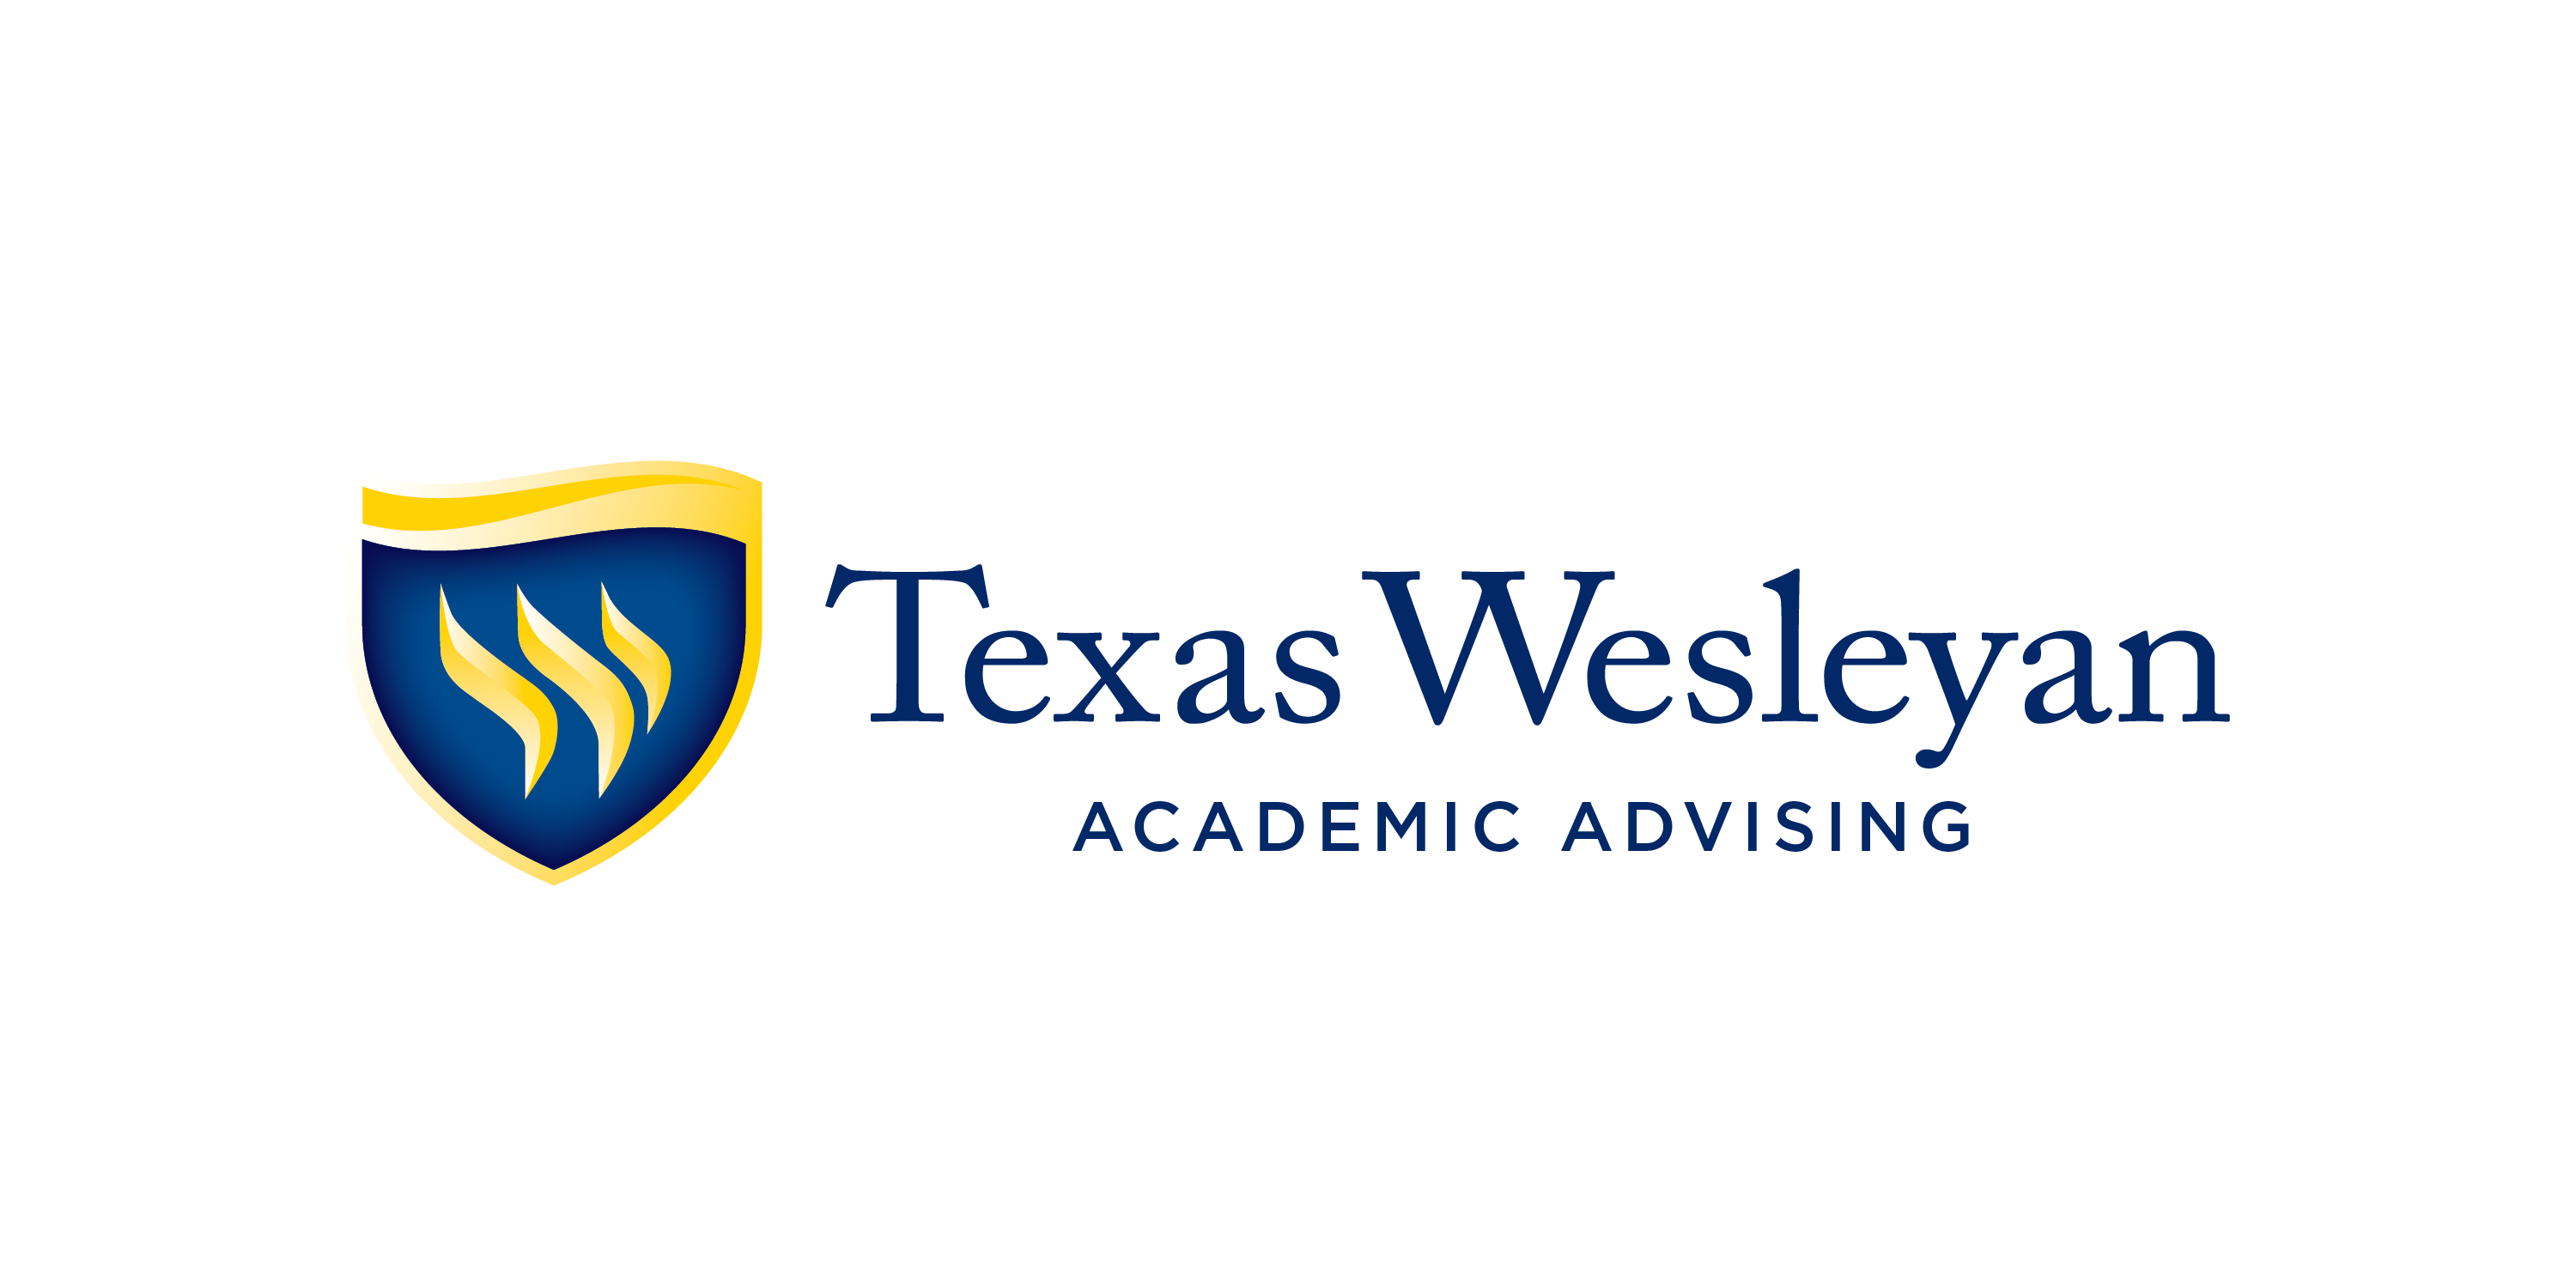 Texas Wesleyan shield logo with Academic Advising department name